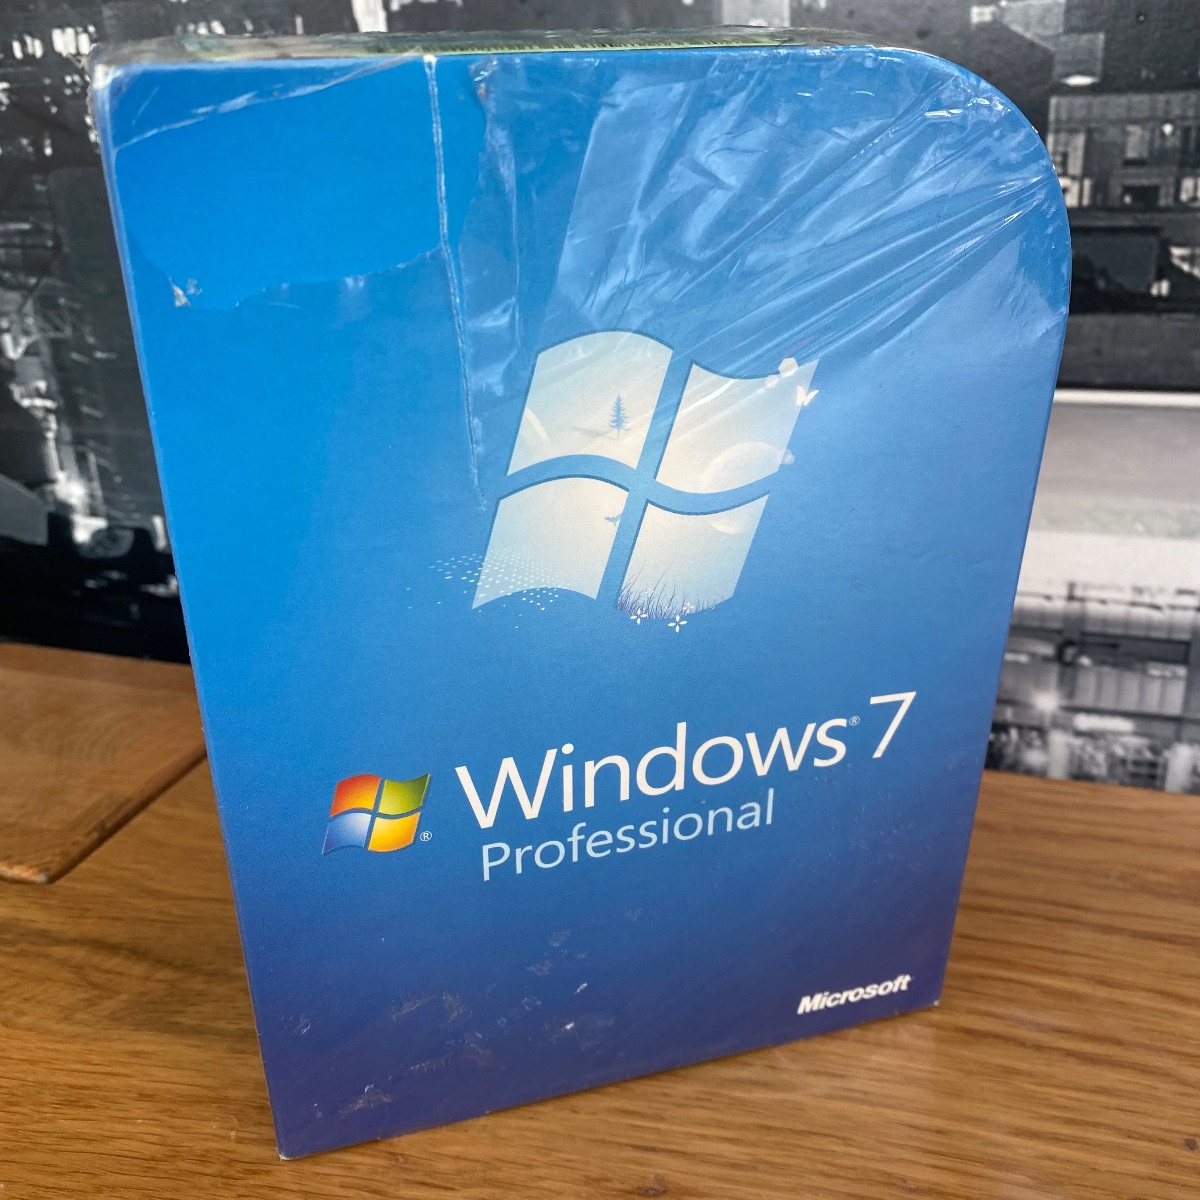 Windows 7 Professional 32/64-Bit DVD Sealed FQC-00133 100% Genuine UK Retail FQC-00133 0008222488354 (Previously Used)